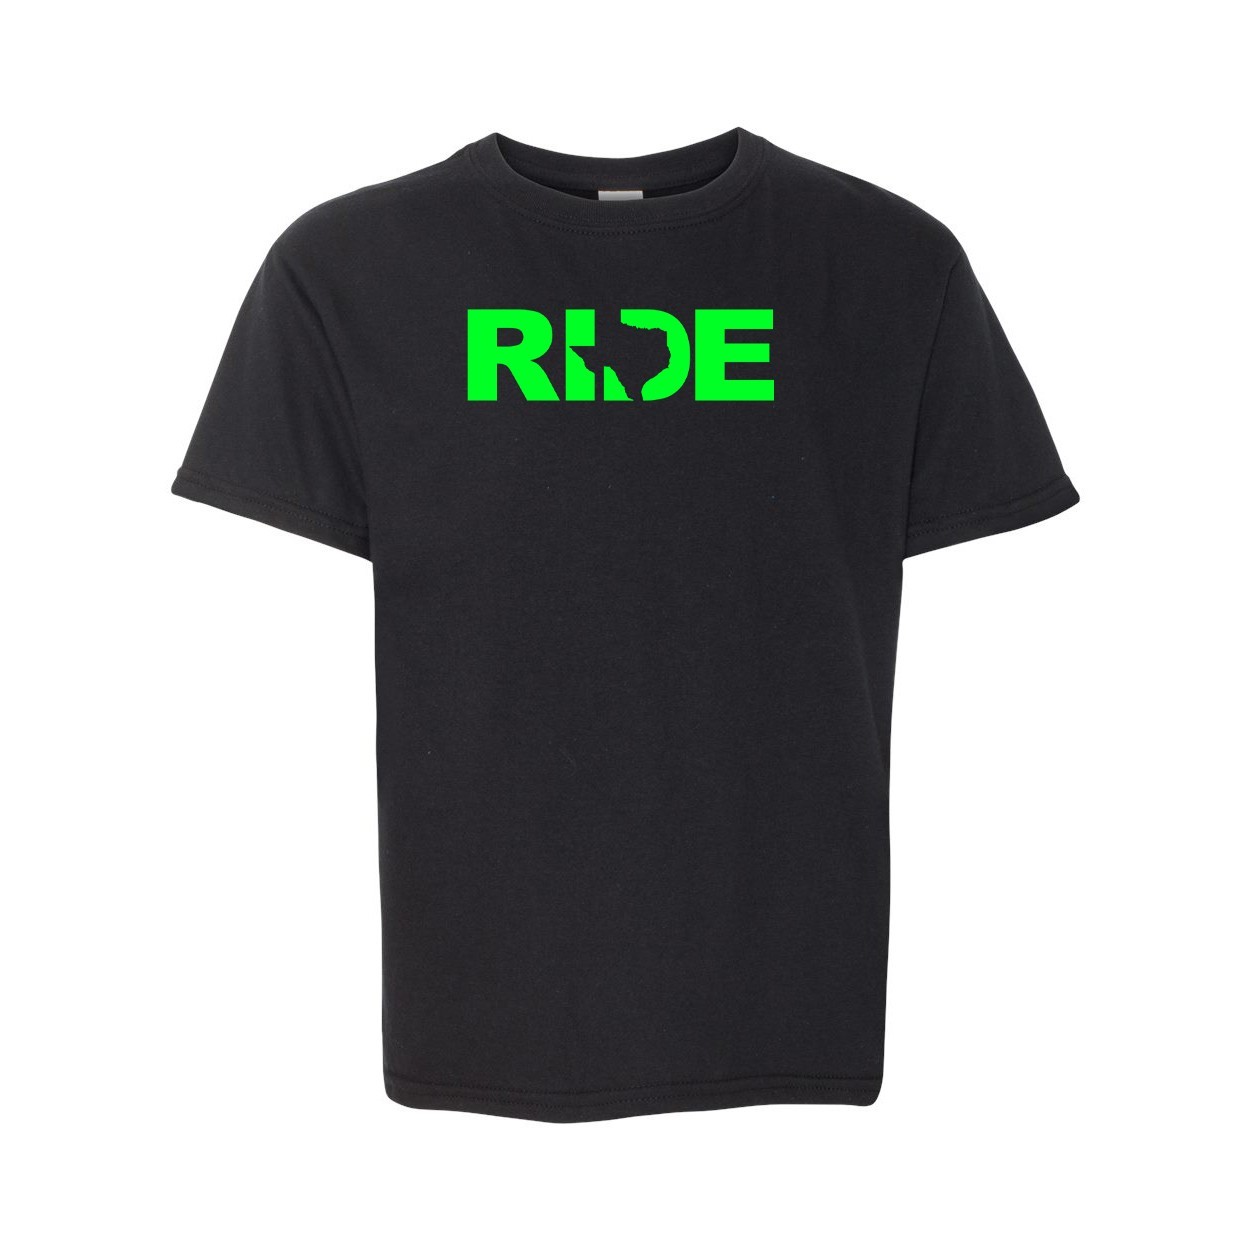 Ride Texas Classic Youth T-Shirt Black (Green Logo)